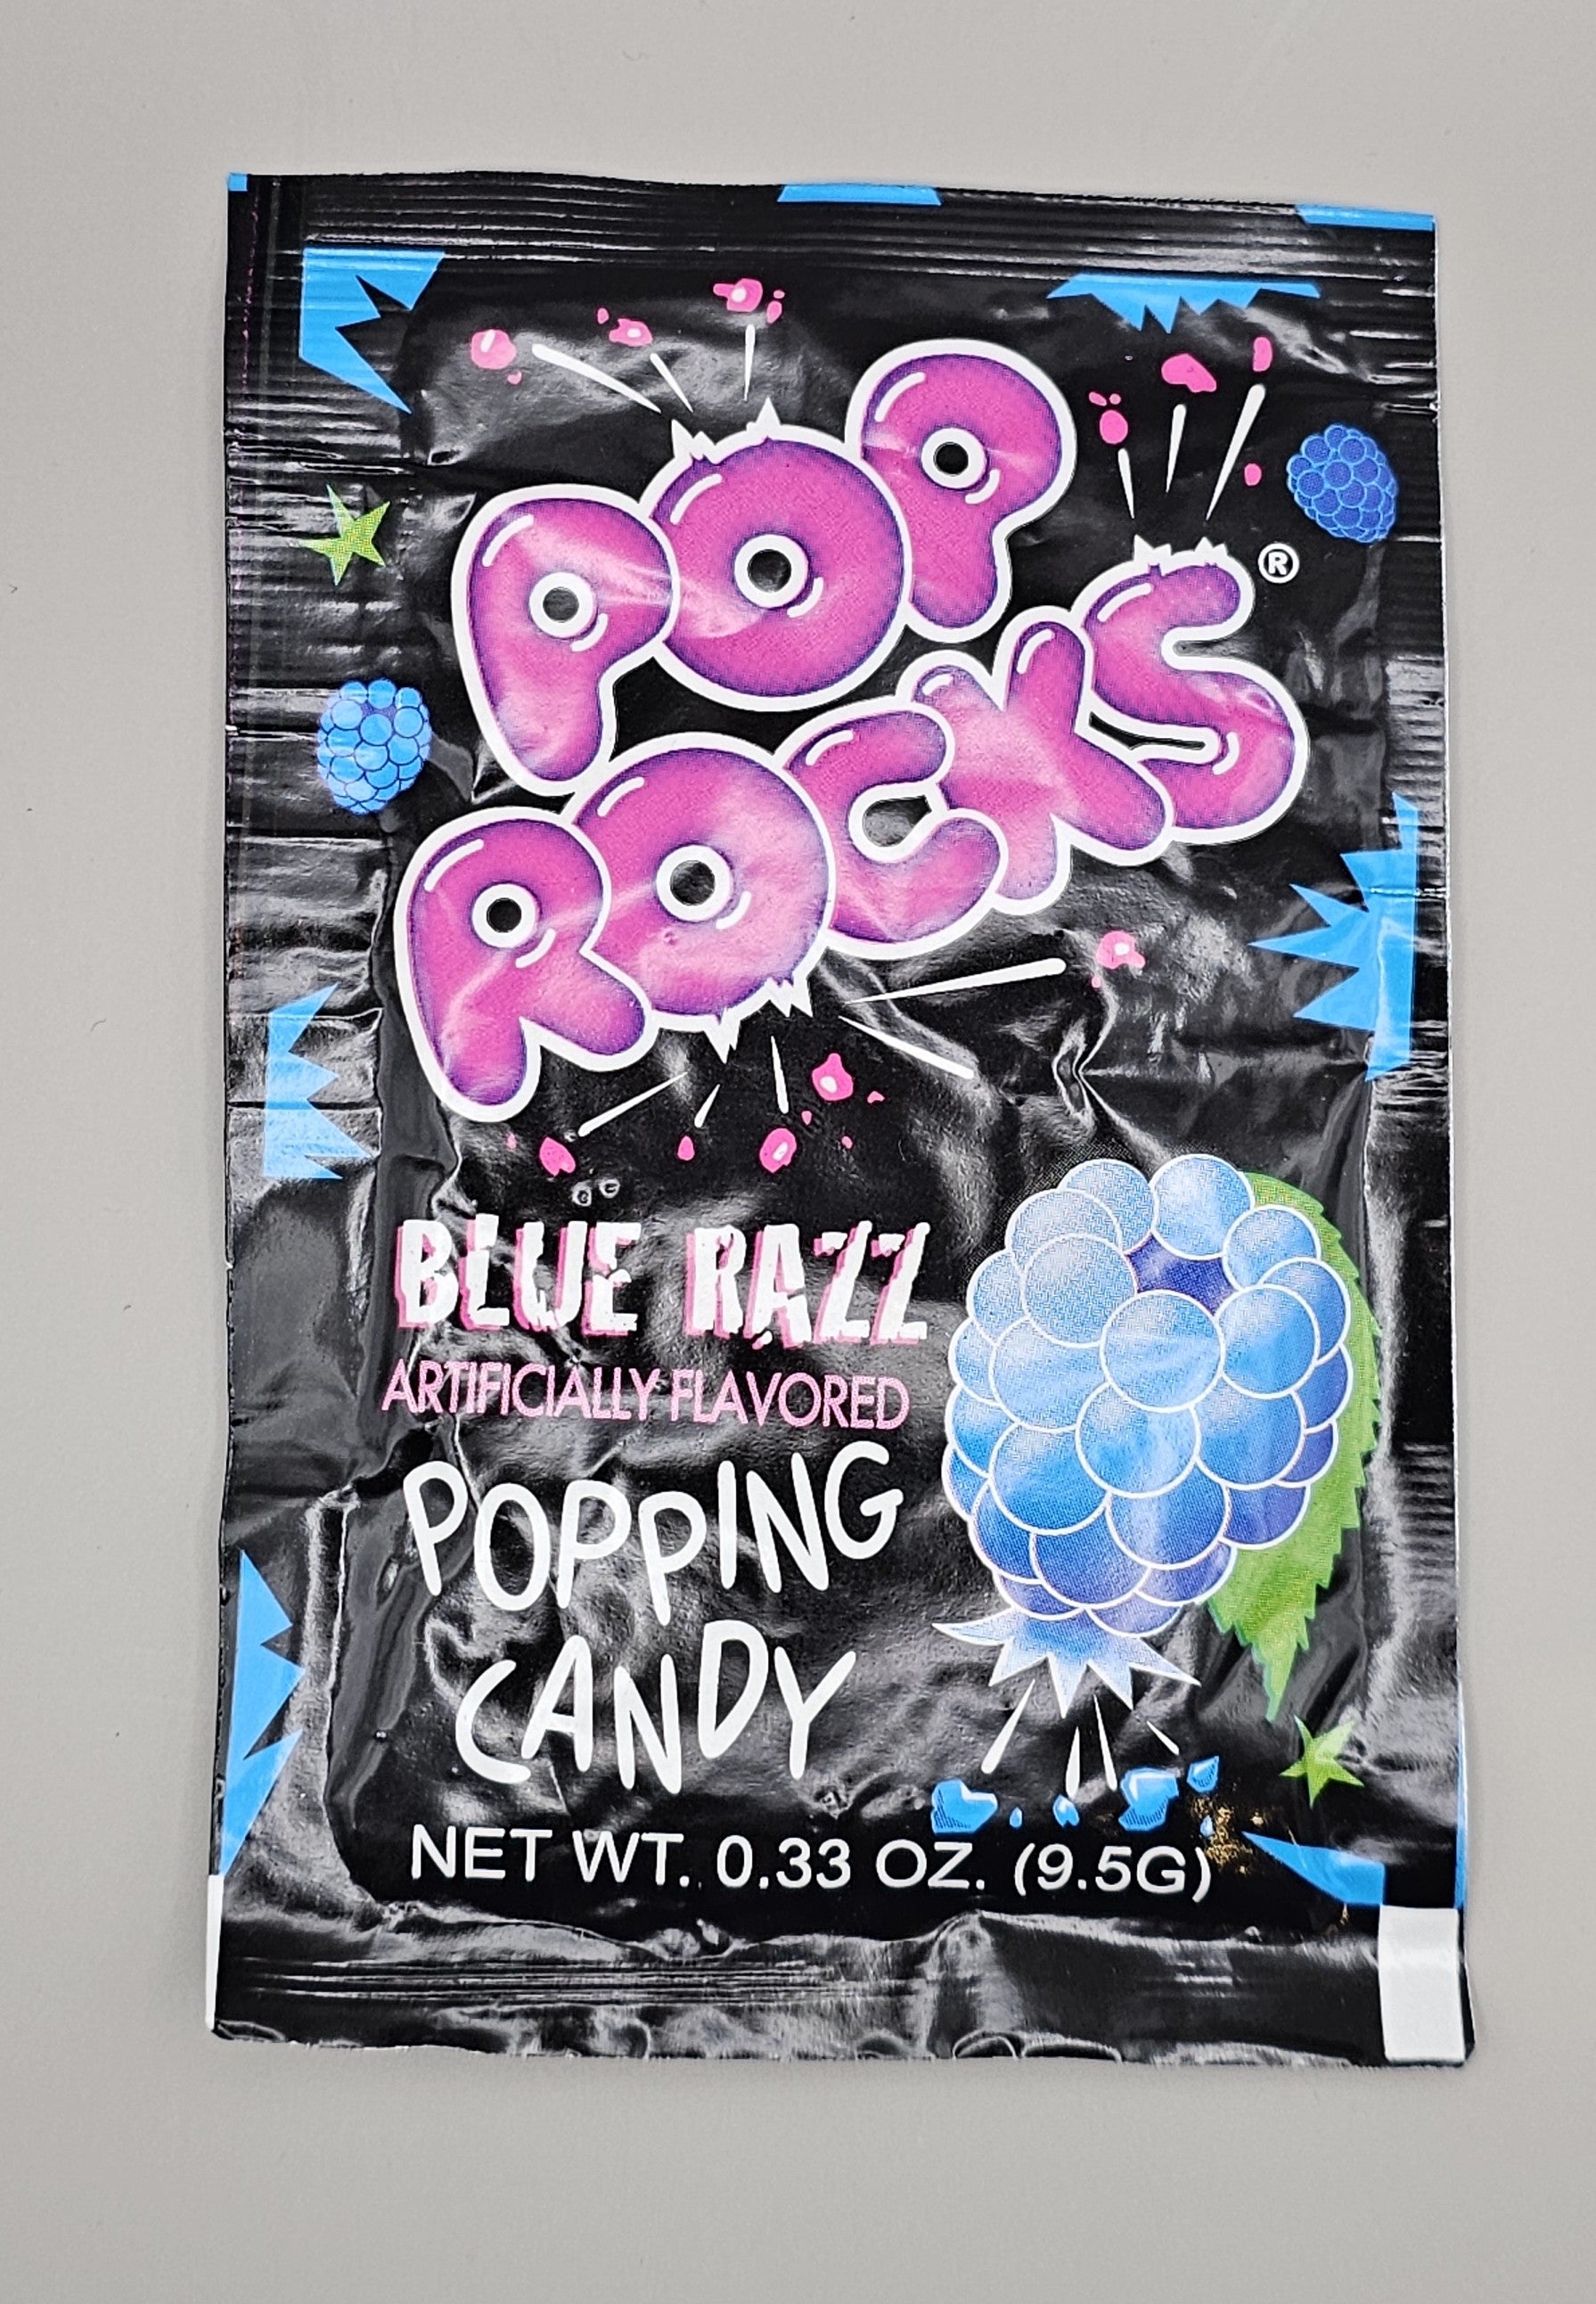 Blue razz pop rocks.